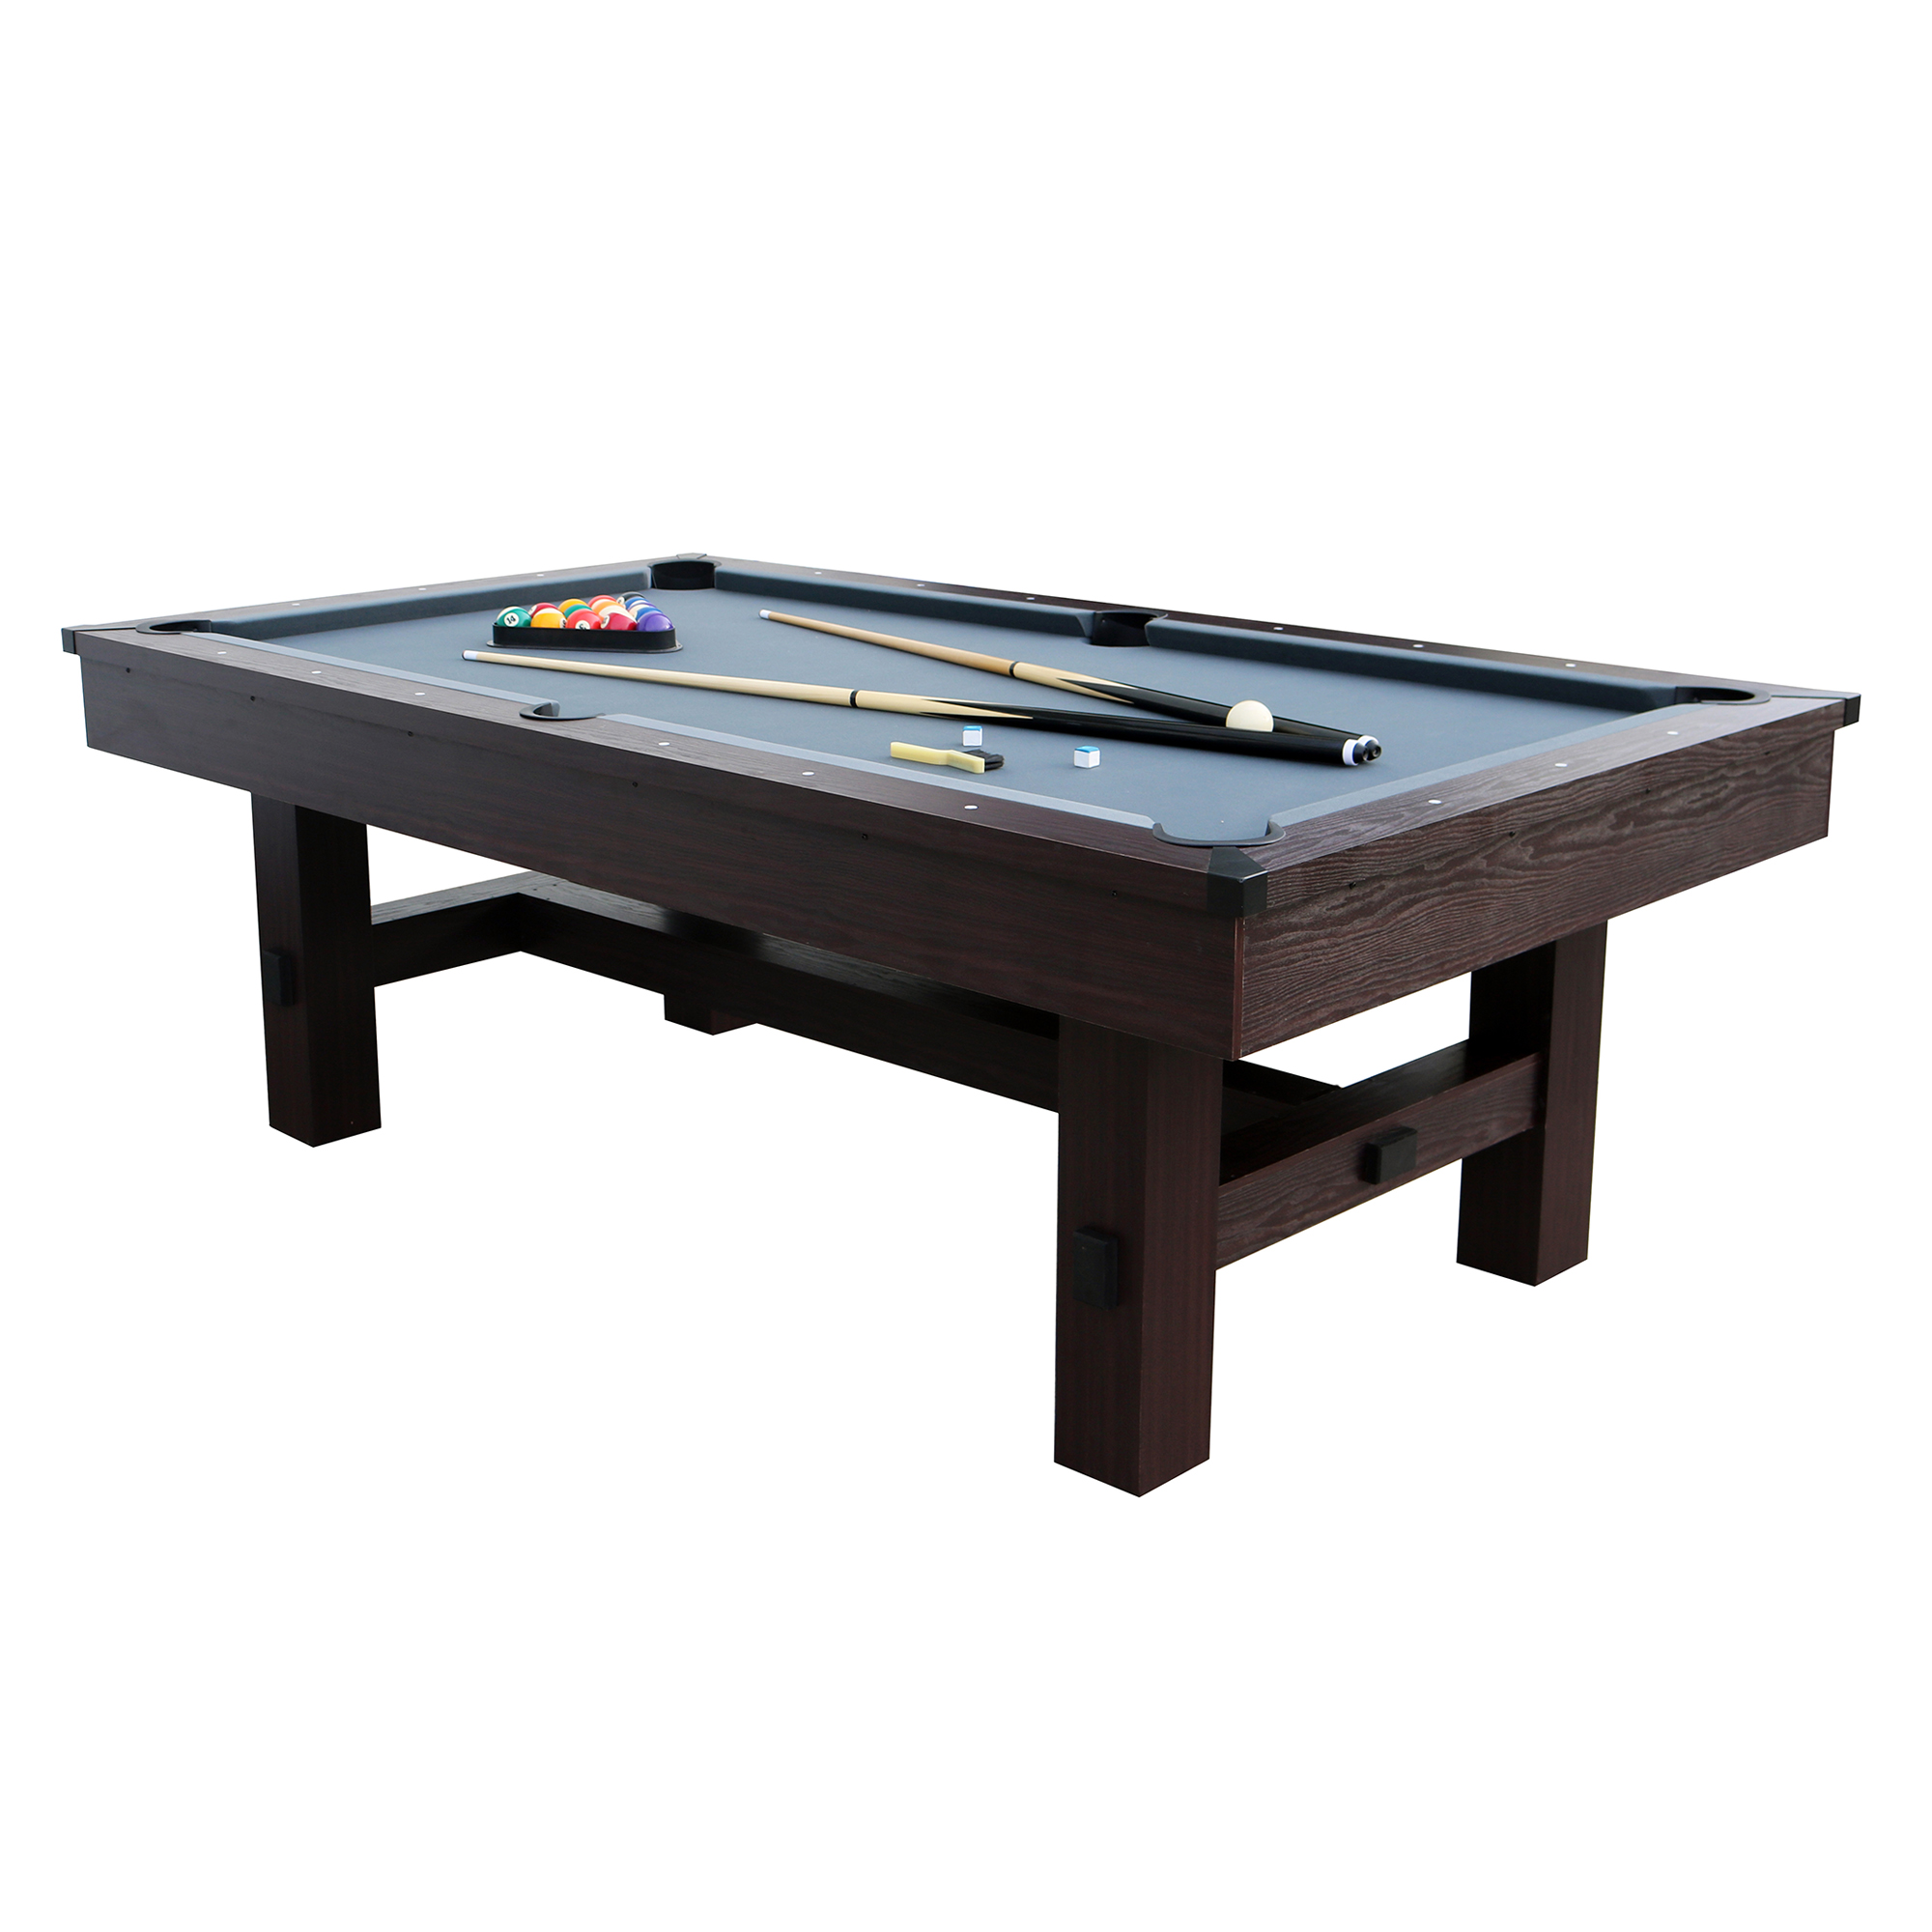 Sportcraft 90″ Lexington Billiard Table with Table Tennis Top